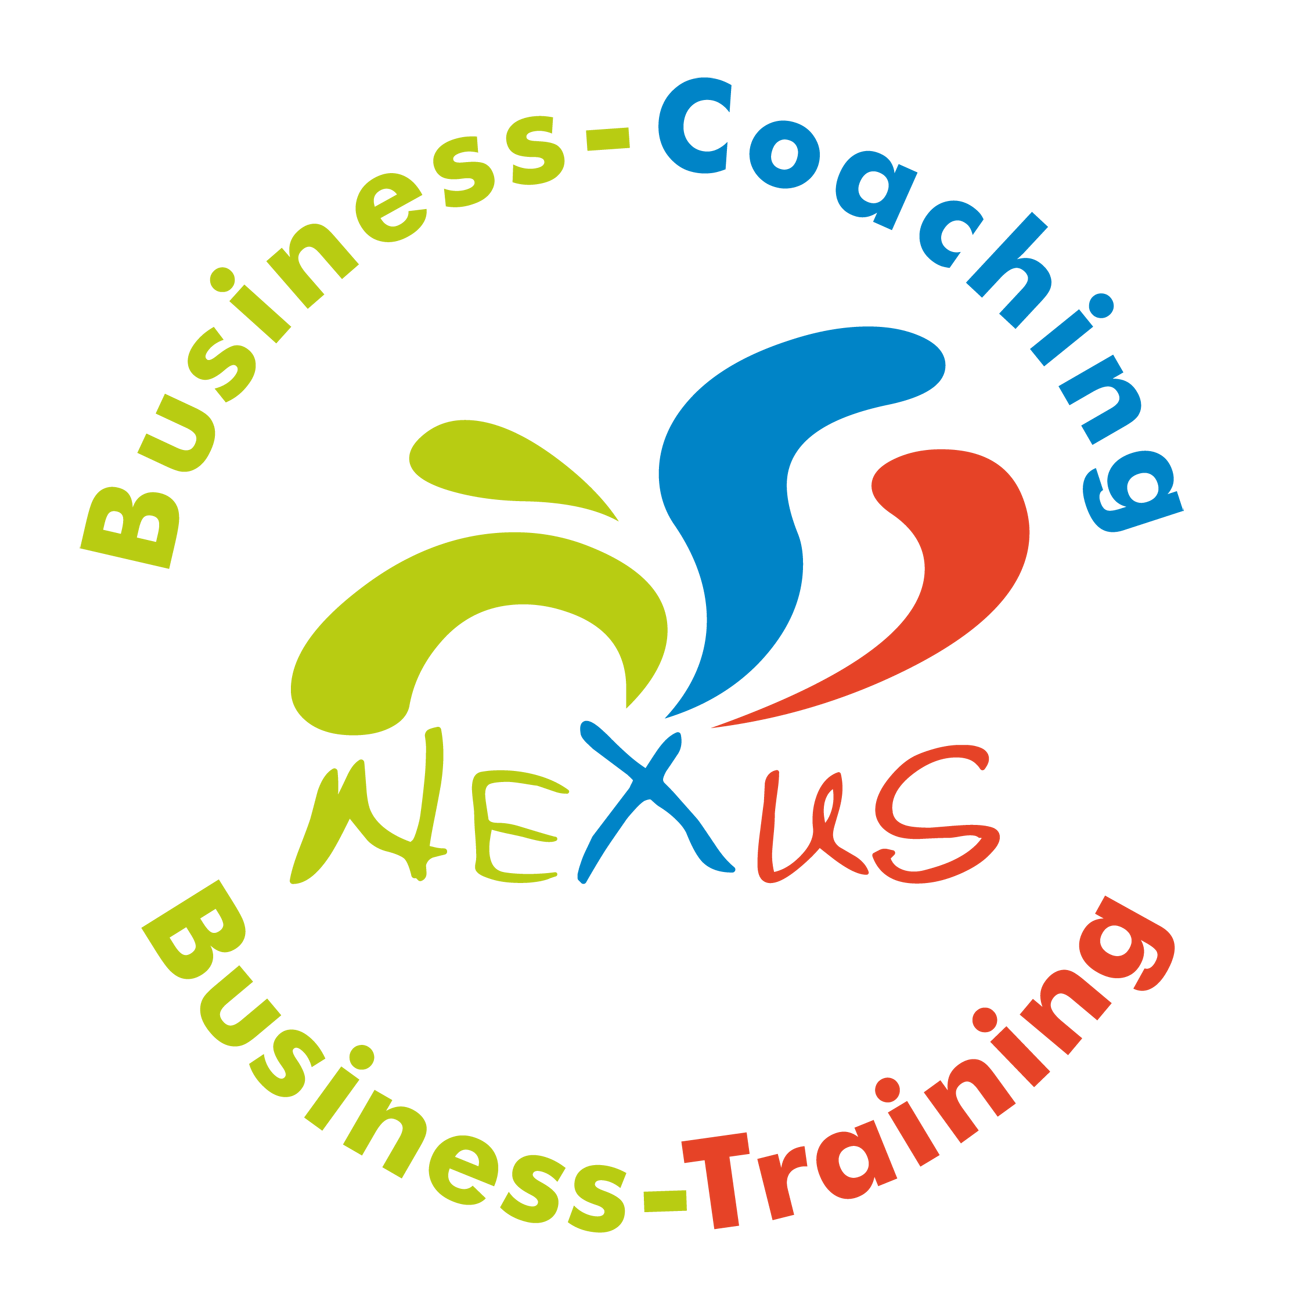 Business-Coaching Bensheim, Business-Einzelcoaching, Business-Training, Führungskräfte-Coaching Bensheim, Führungskräfte-Training, Kommunikationstraining, Persönlichkeitstraining